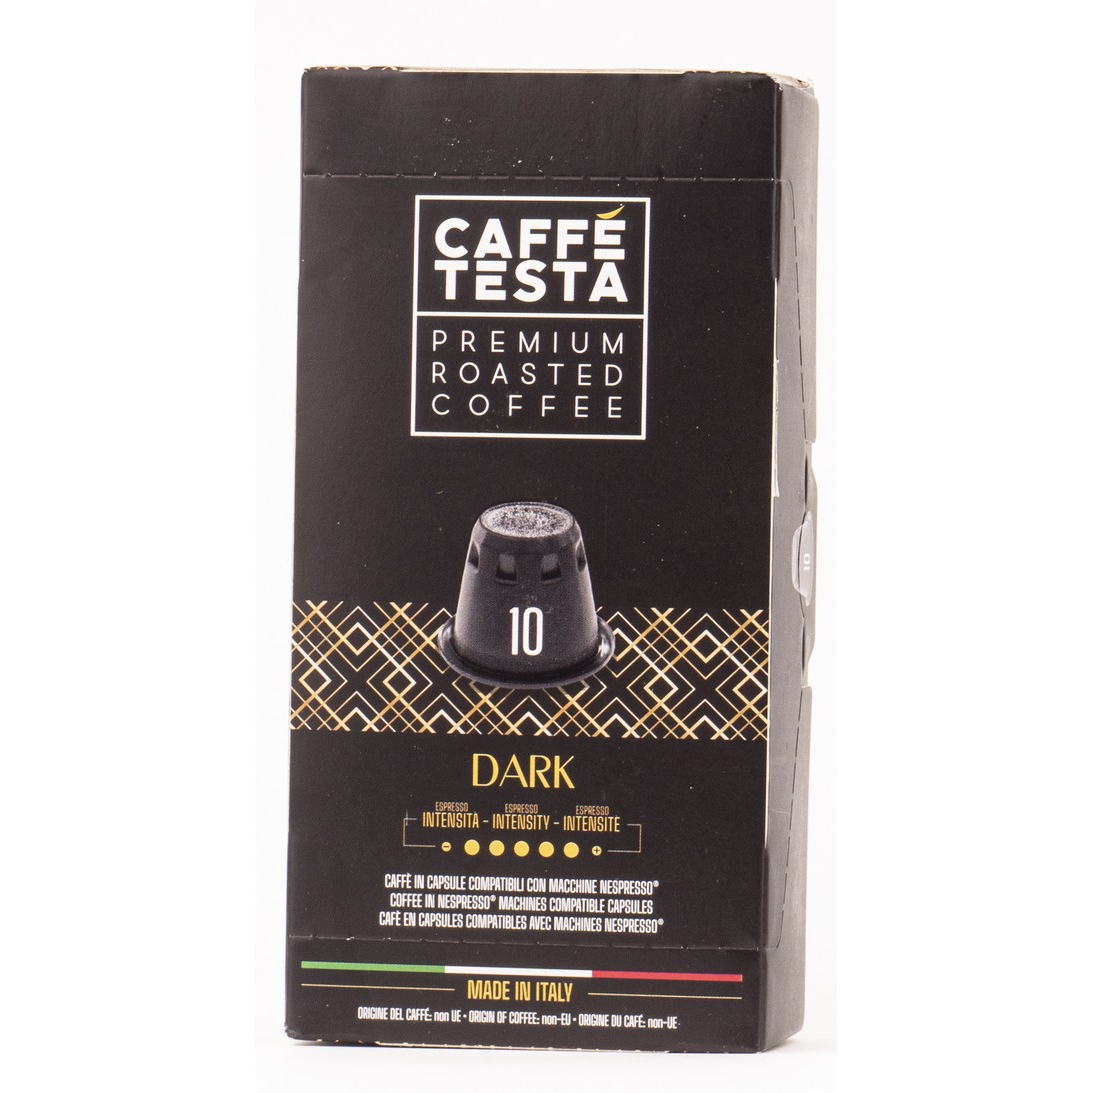 Кофе Caffe Testa Dark в капсулах 20/80, 55 г кофе в капсулах caffe vergnano без кофеина 10 шт х 5 г